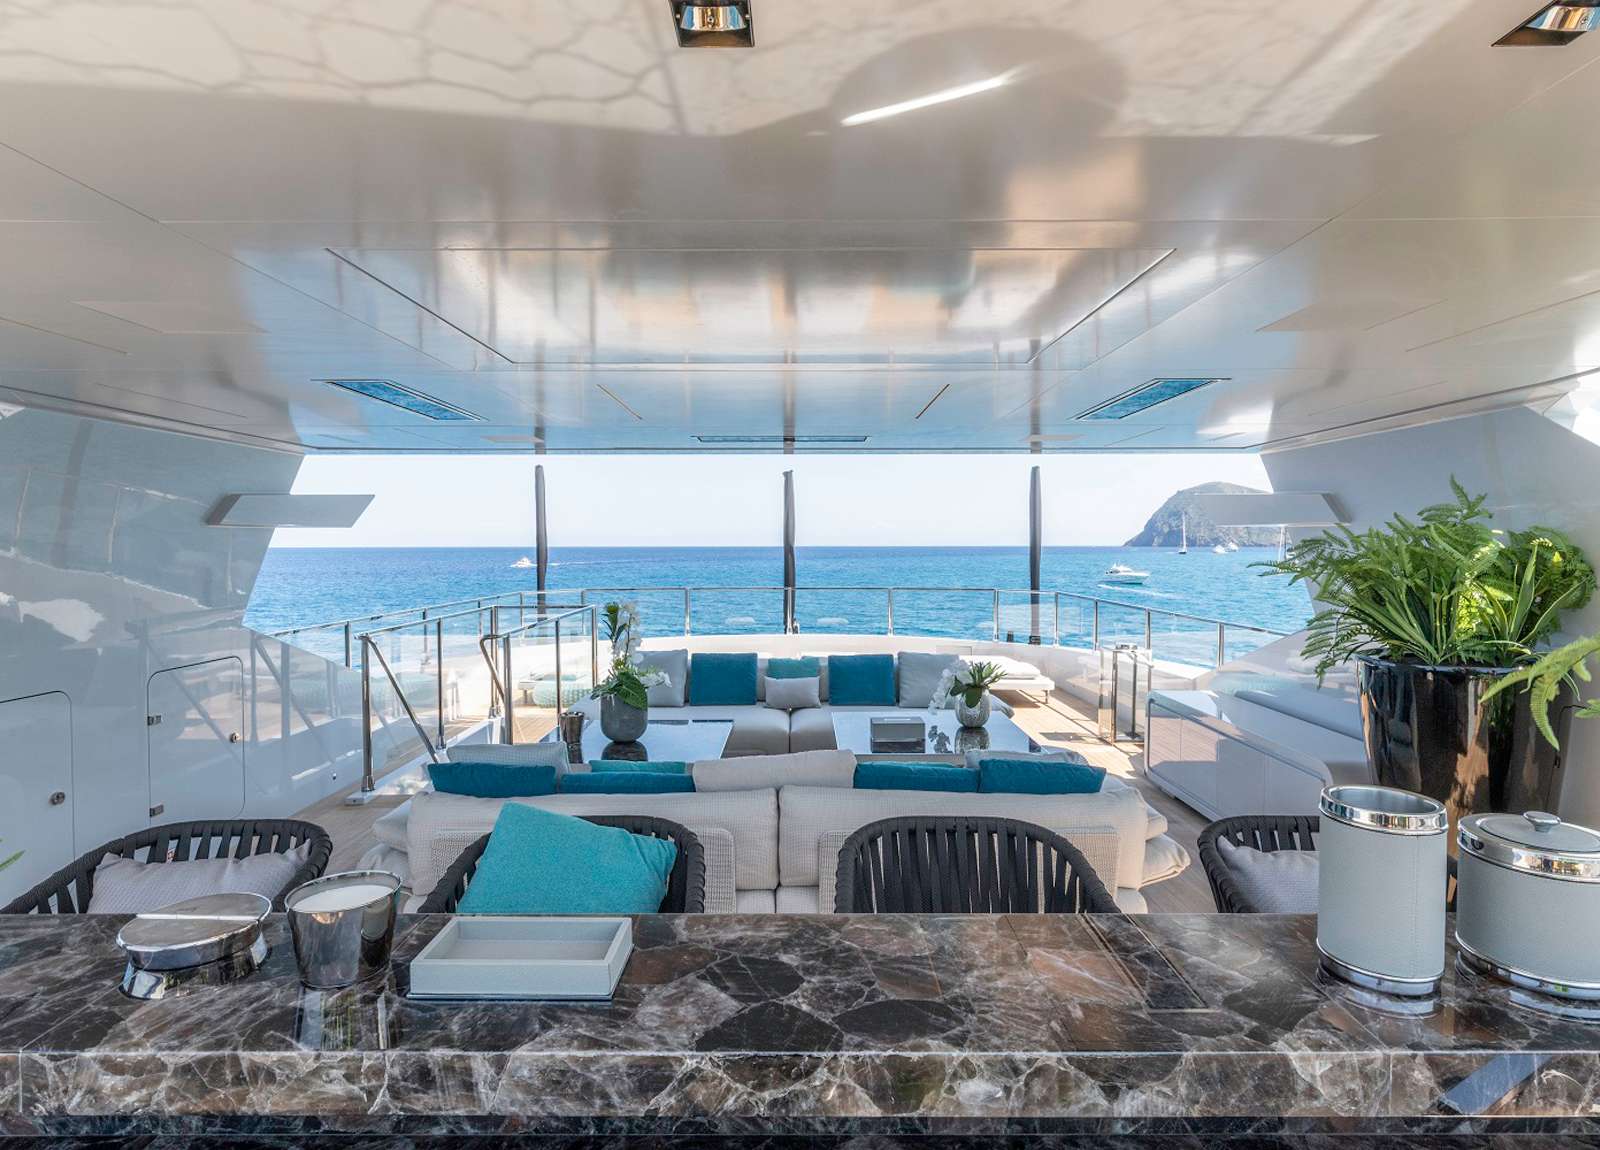 upperdeck luxury yacht rossinavi 50m lel charter